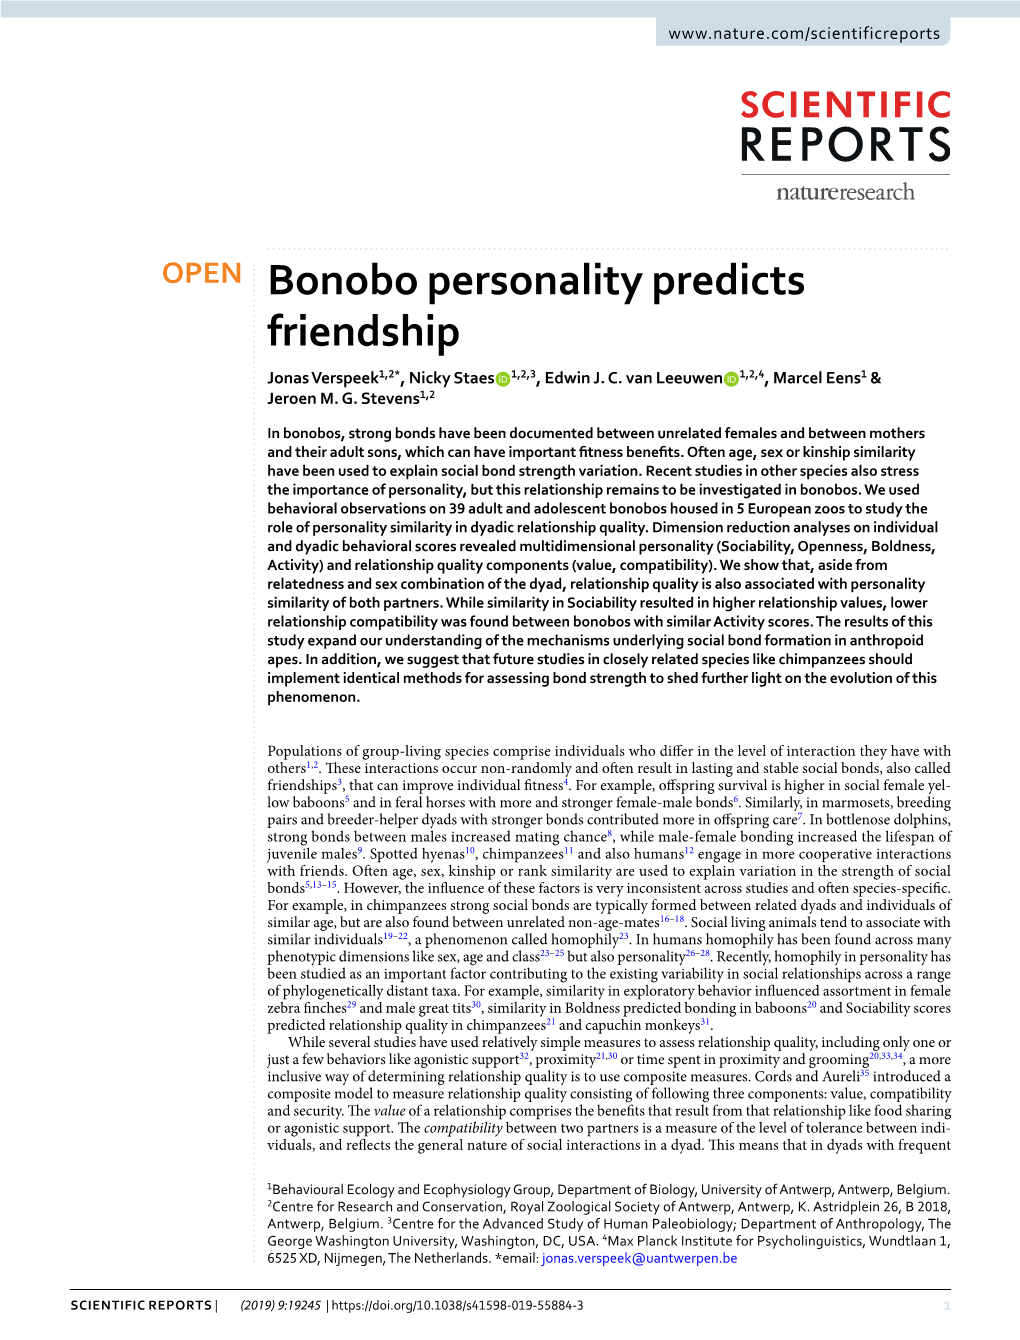 Bonobo Personality Predicts Friendship Jonas Verspeek1,2*, Nicky Staes 1,2,3, Edwin J